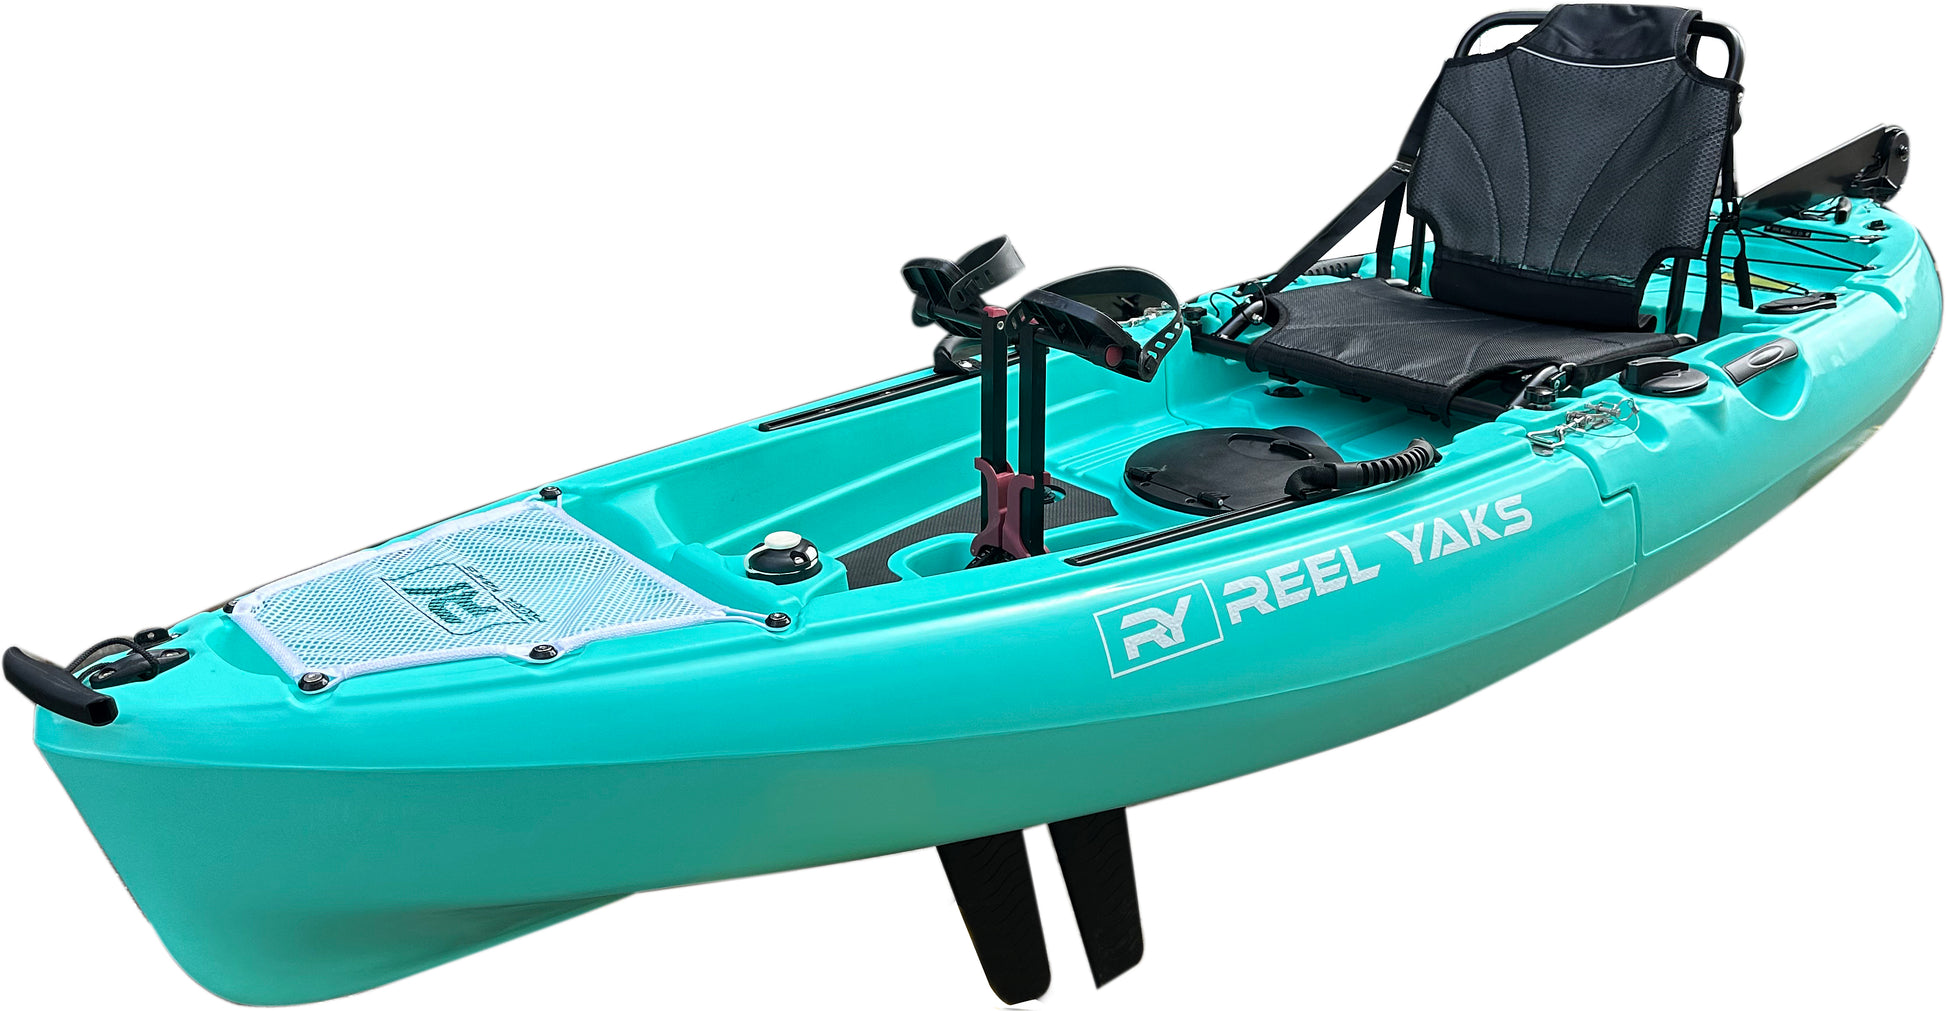 What are kayak rod holder mounts – ReelYaks